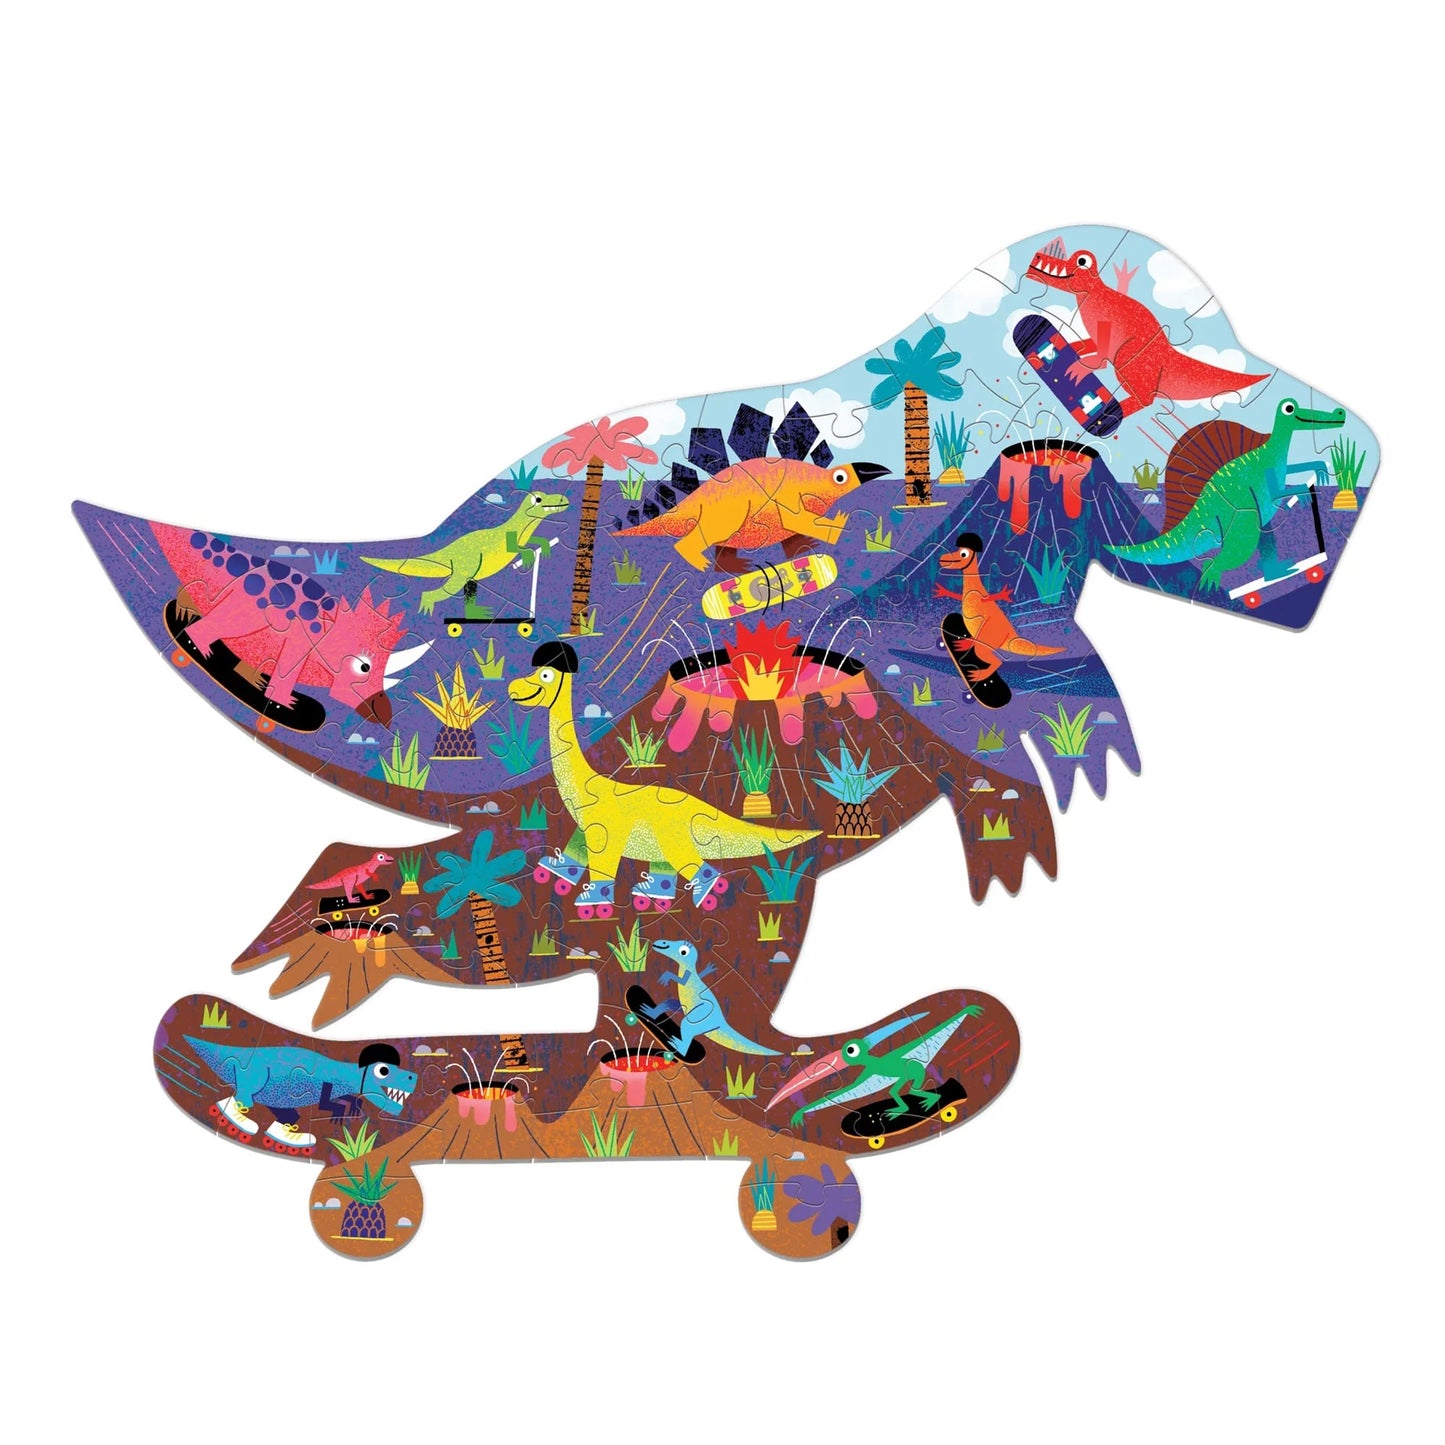 Mudpuppy - Jurassic Skatepark Shaped Puzzle